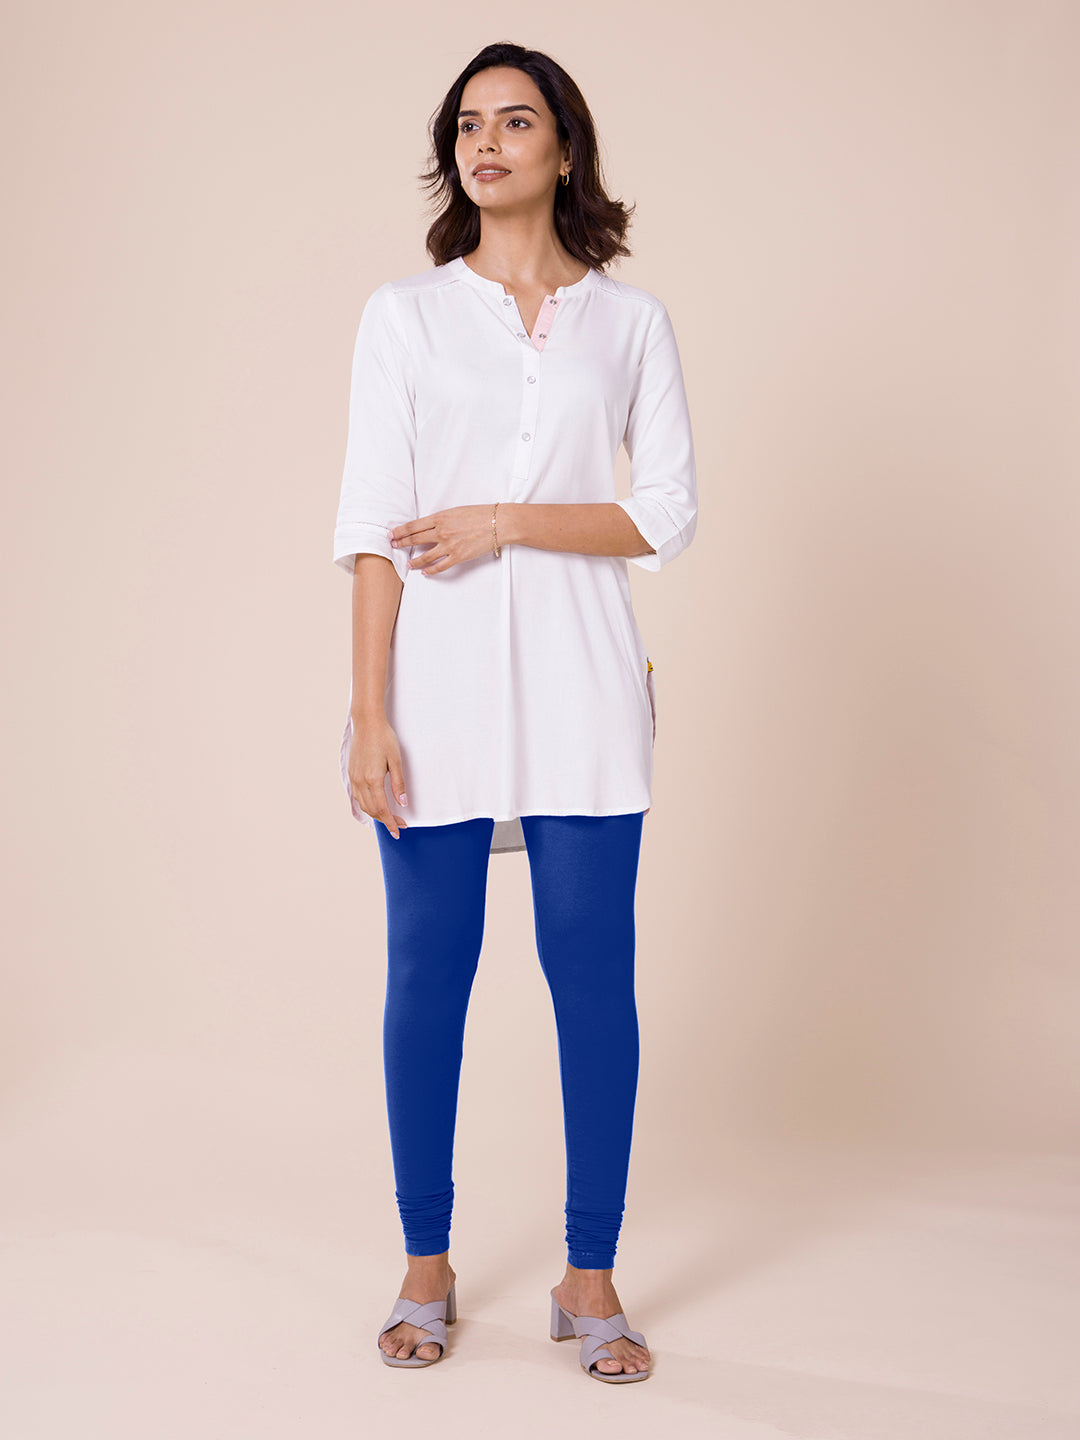 Sky Blue Color Legi Churidar Leggings for Women Cotton Bollywood Style Pant